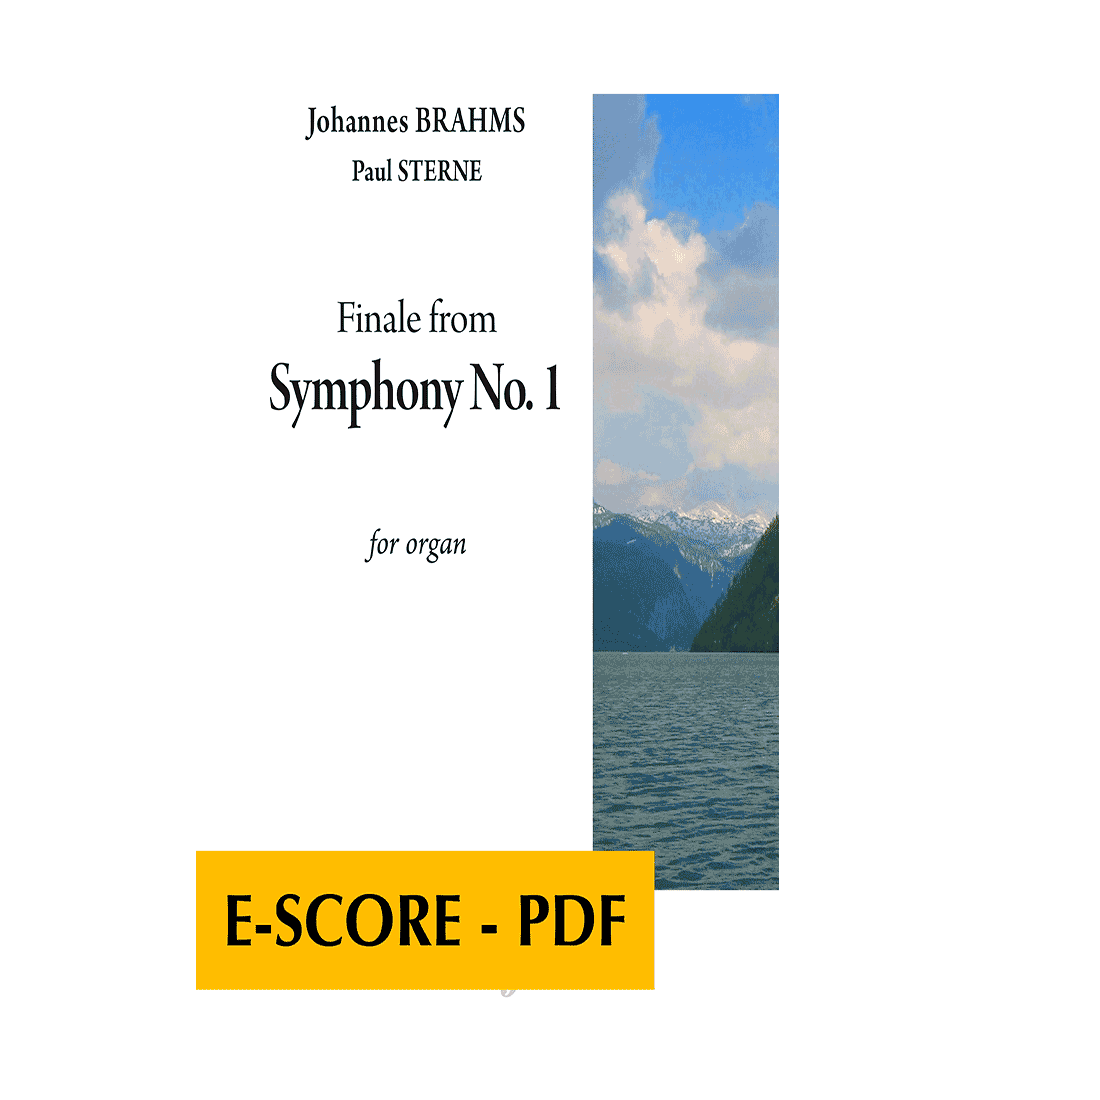 Finale from Symphony No.1 for organ - E-score PDF